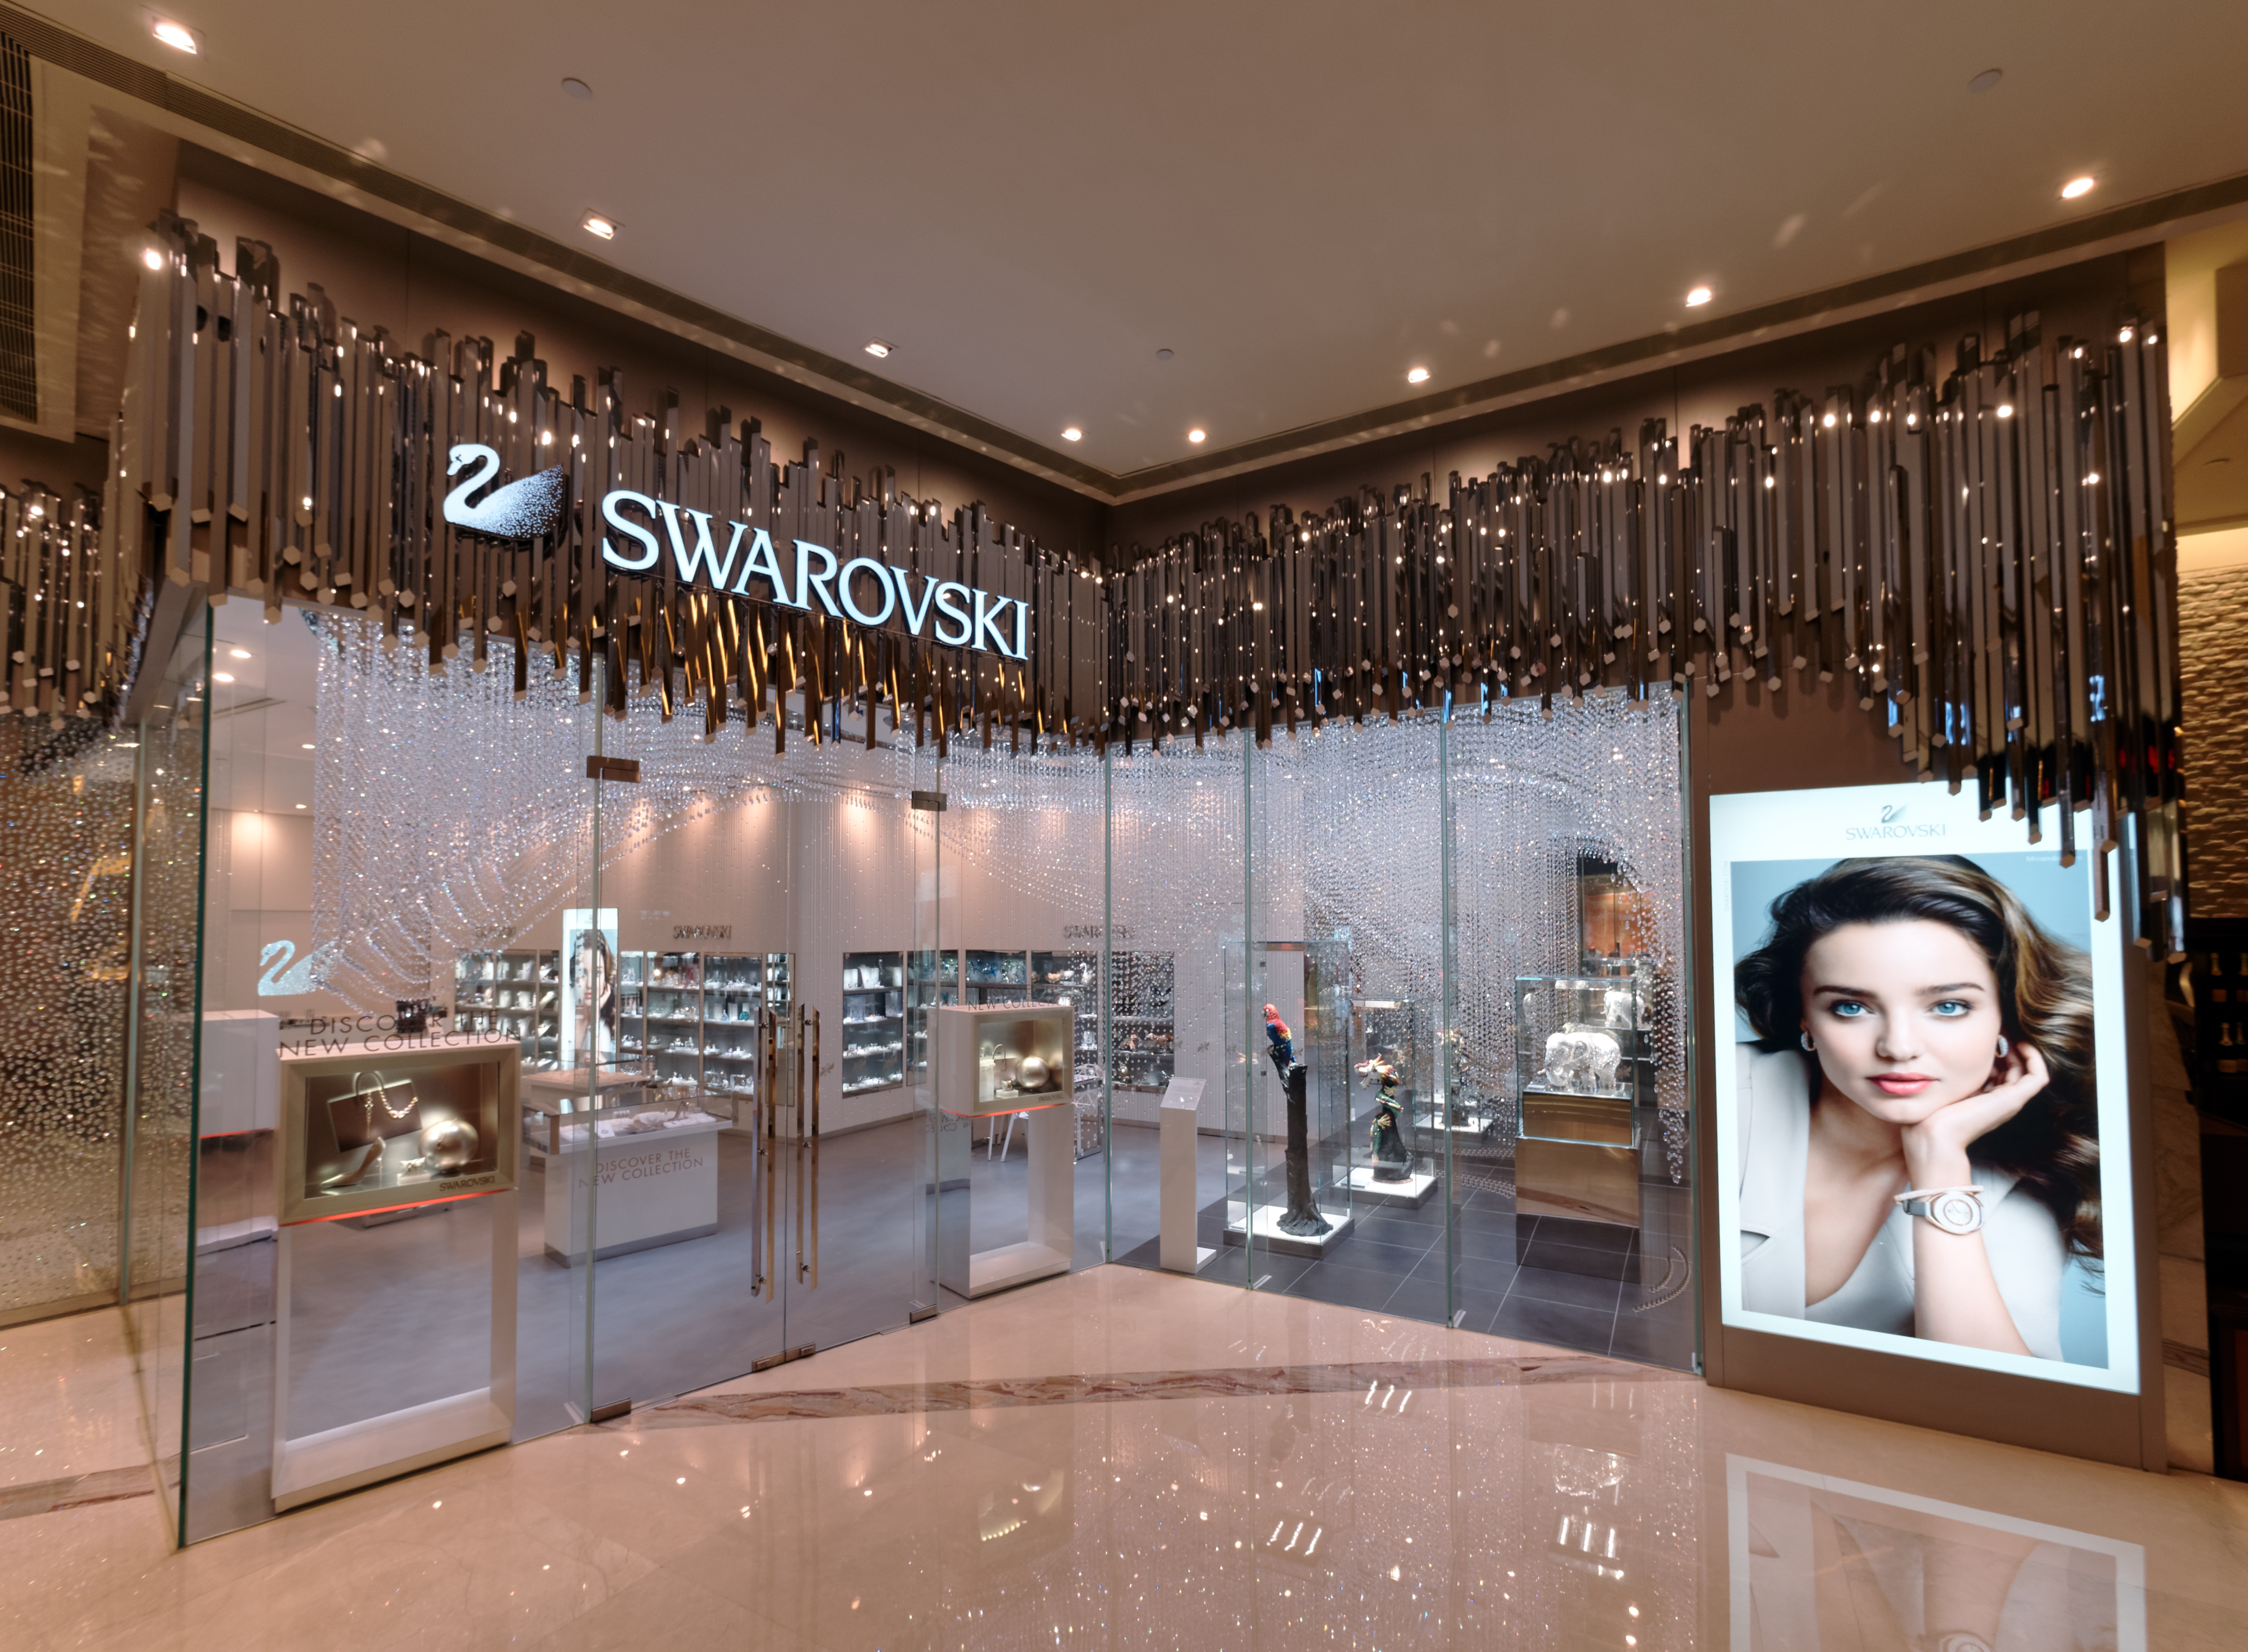 Swarovski.com US Cyber Monday Beauty Deals & Sales | Chic moeY